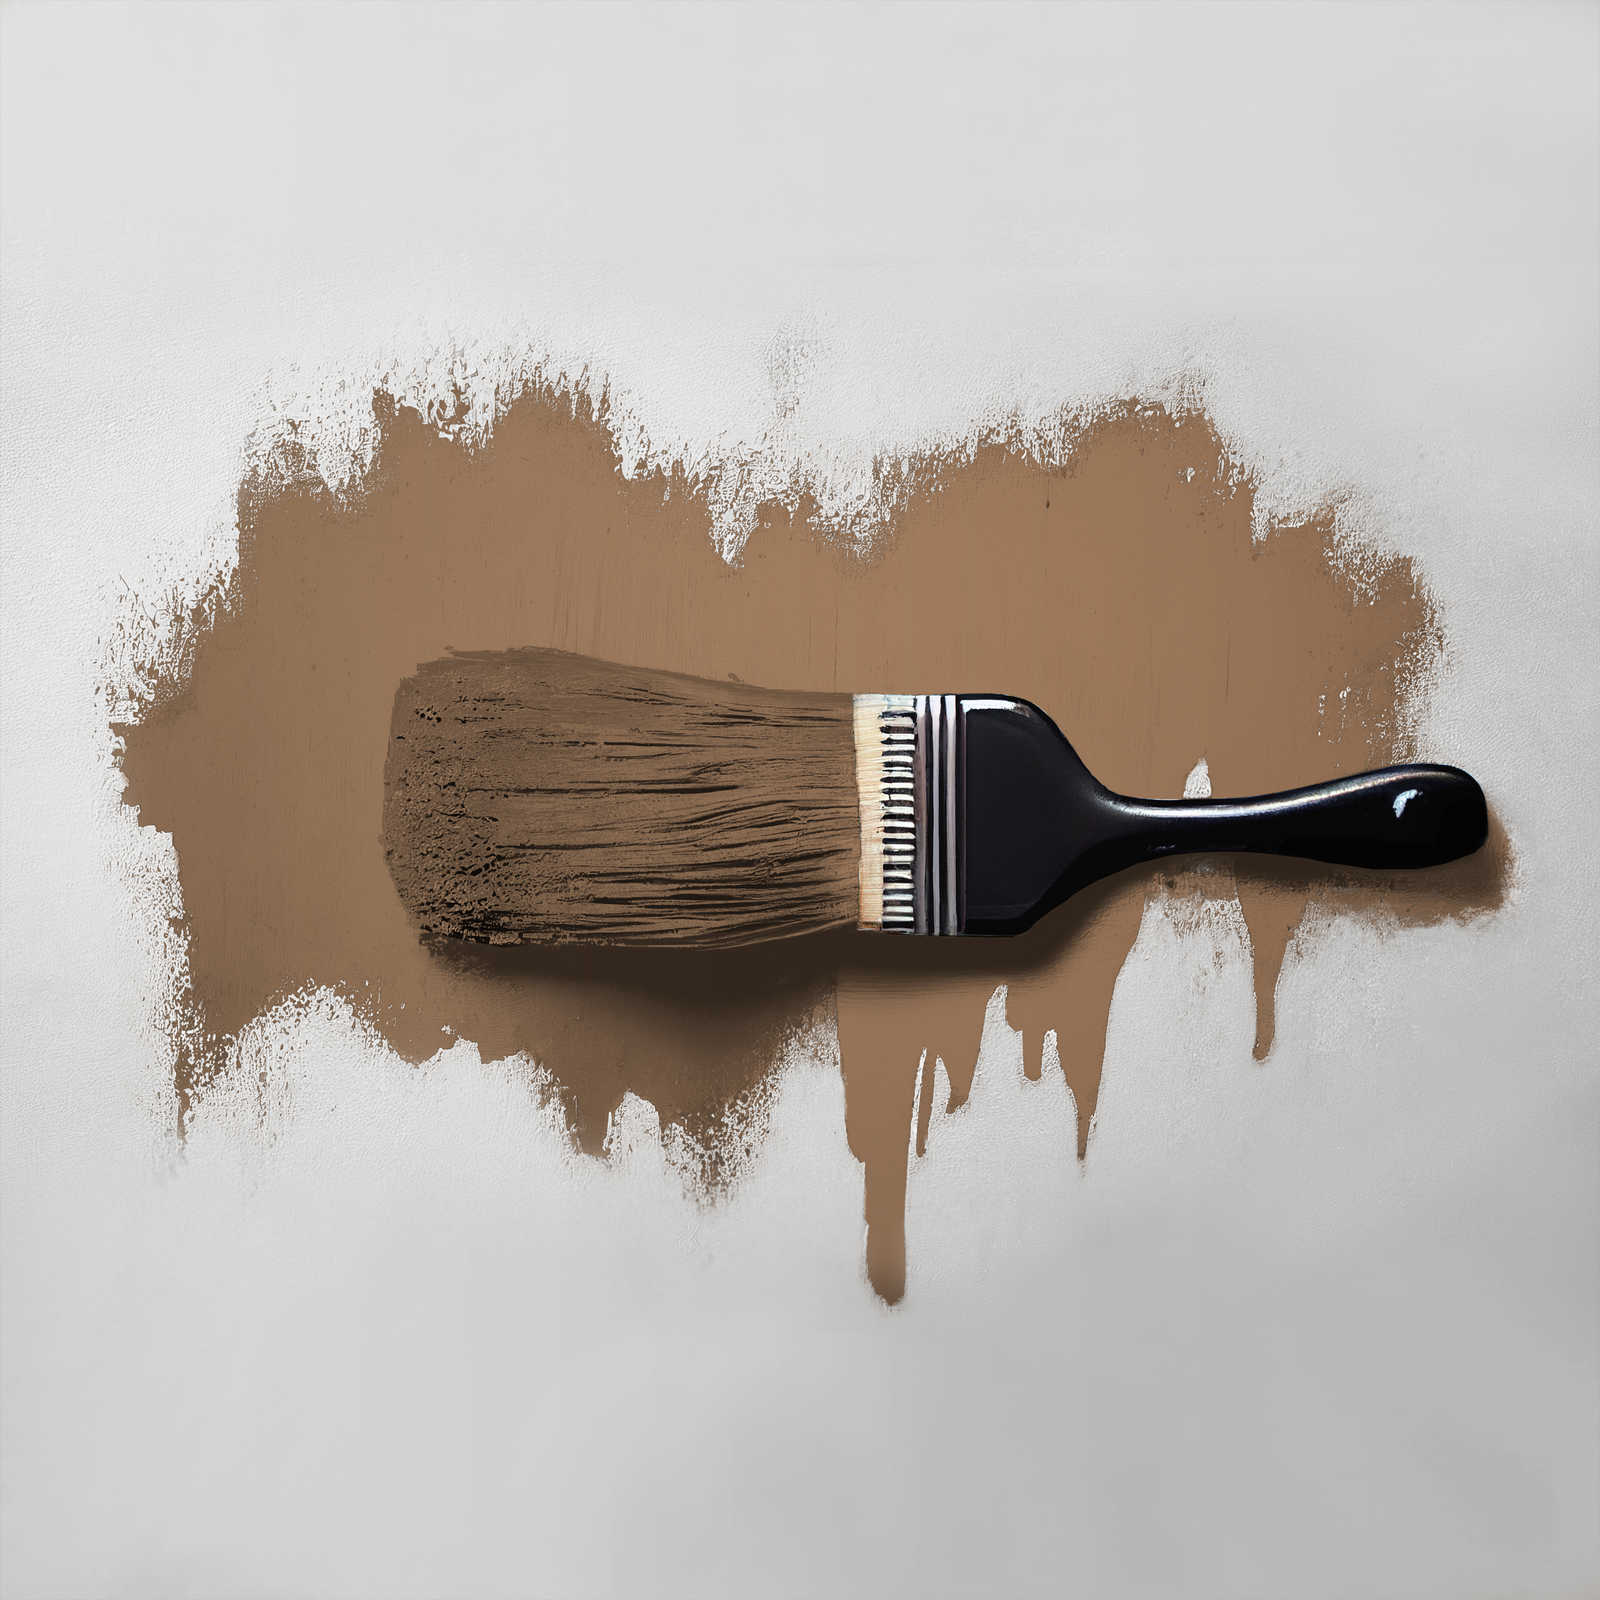             Pittura murale TCK6007 »Awesome Anis« in marrone accogliente – 2,5 litri
        